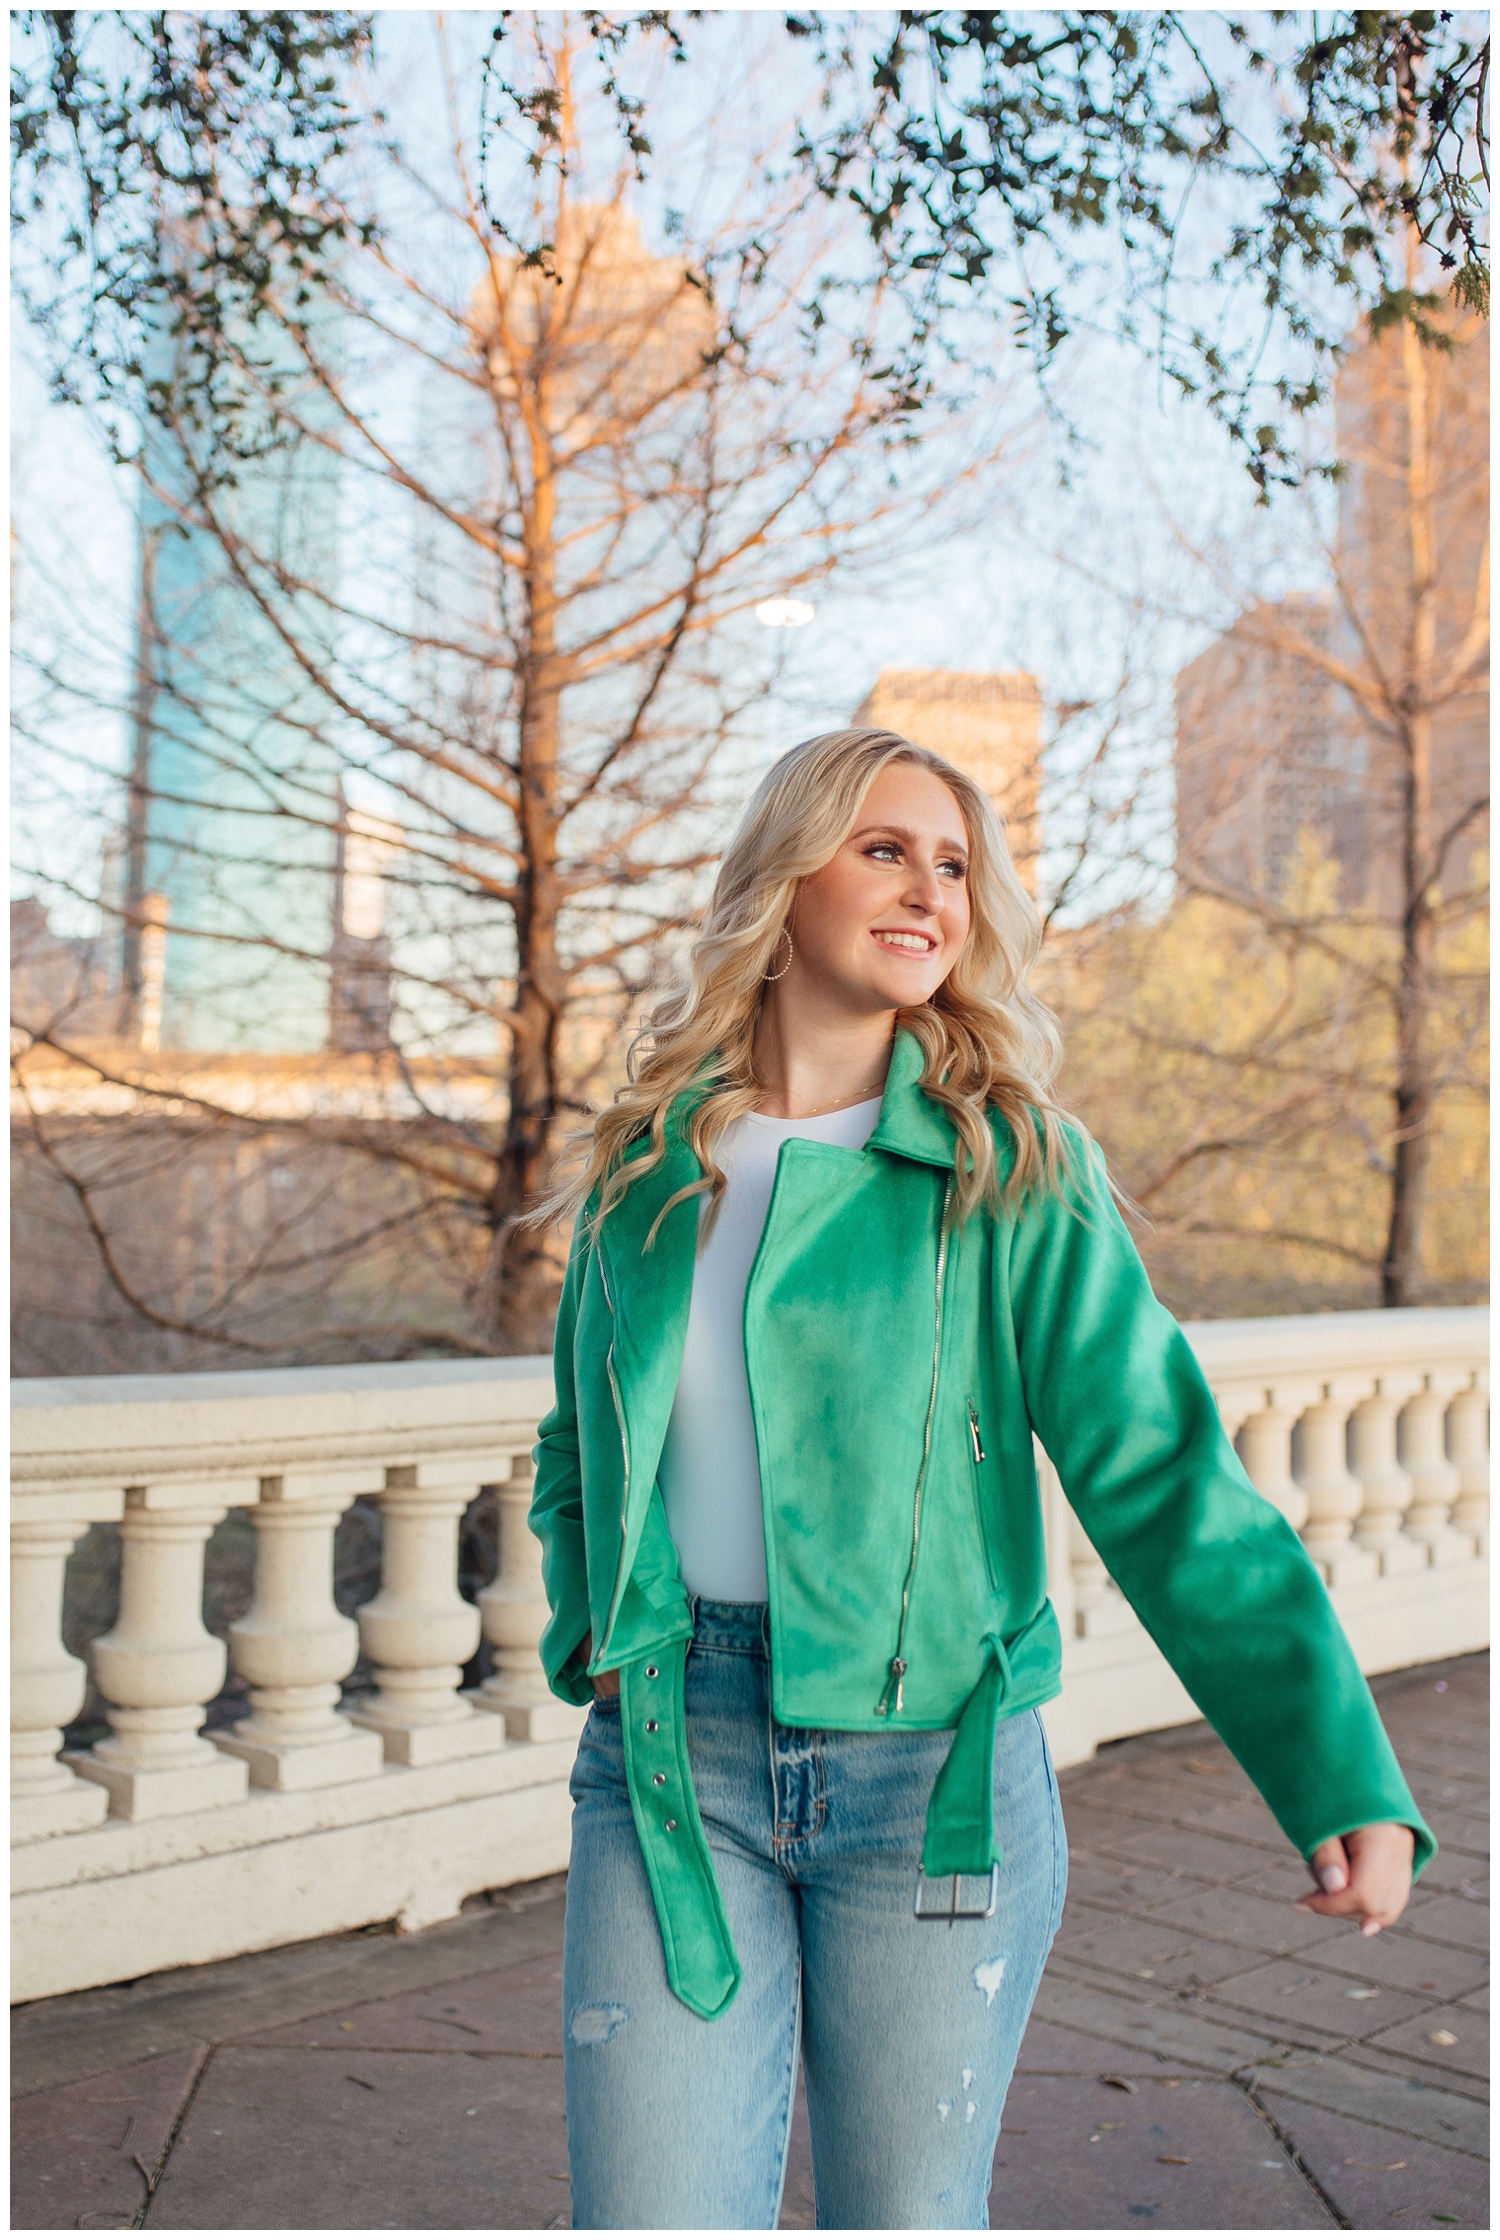 senior pictures Houston Texas on Sabine Street bridge in green jacket and jeans walking